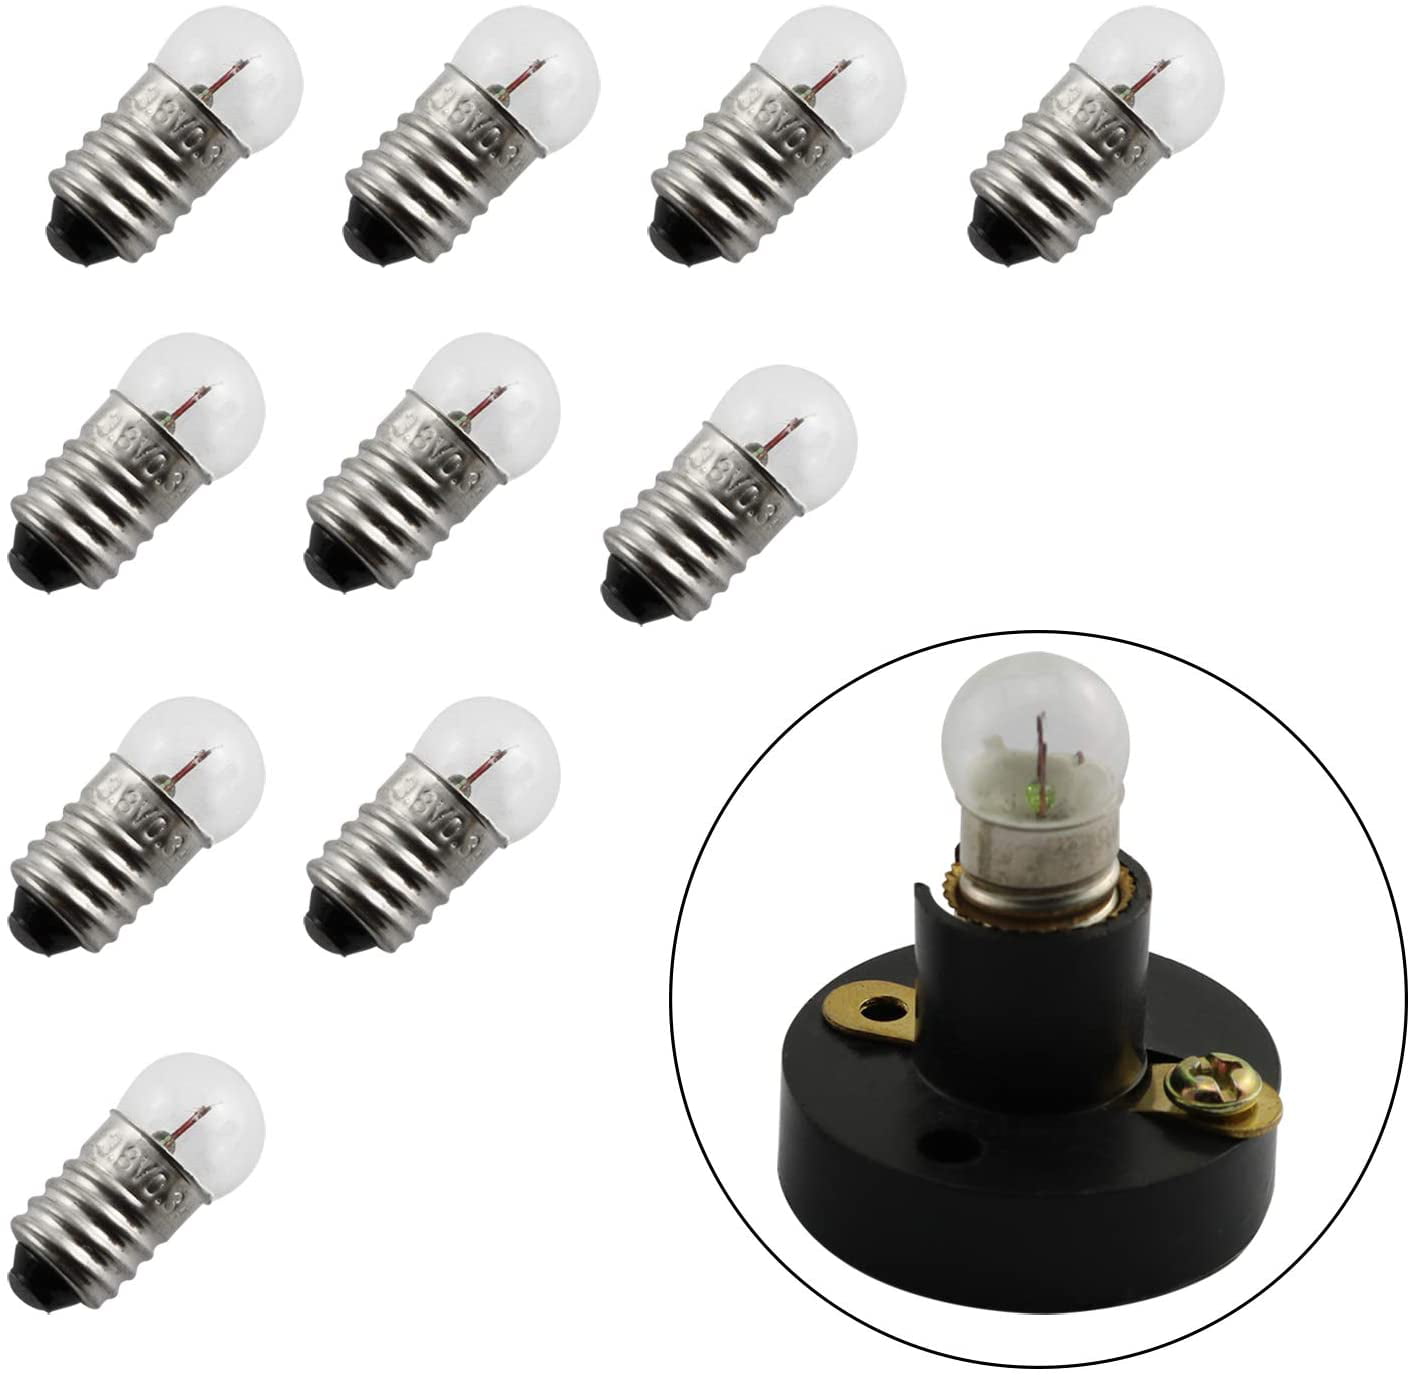 10-Pack E10 Mini Light Bulbs Base Indicator Light Incandescent Bulb Lamp for Physical Experiment 3.8V 0.3A (No Base) - Walmart.com